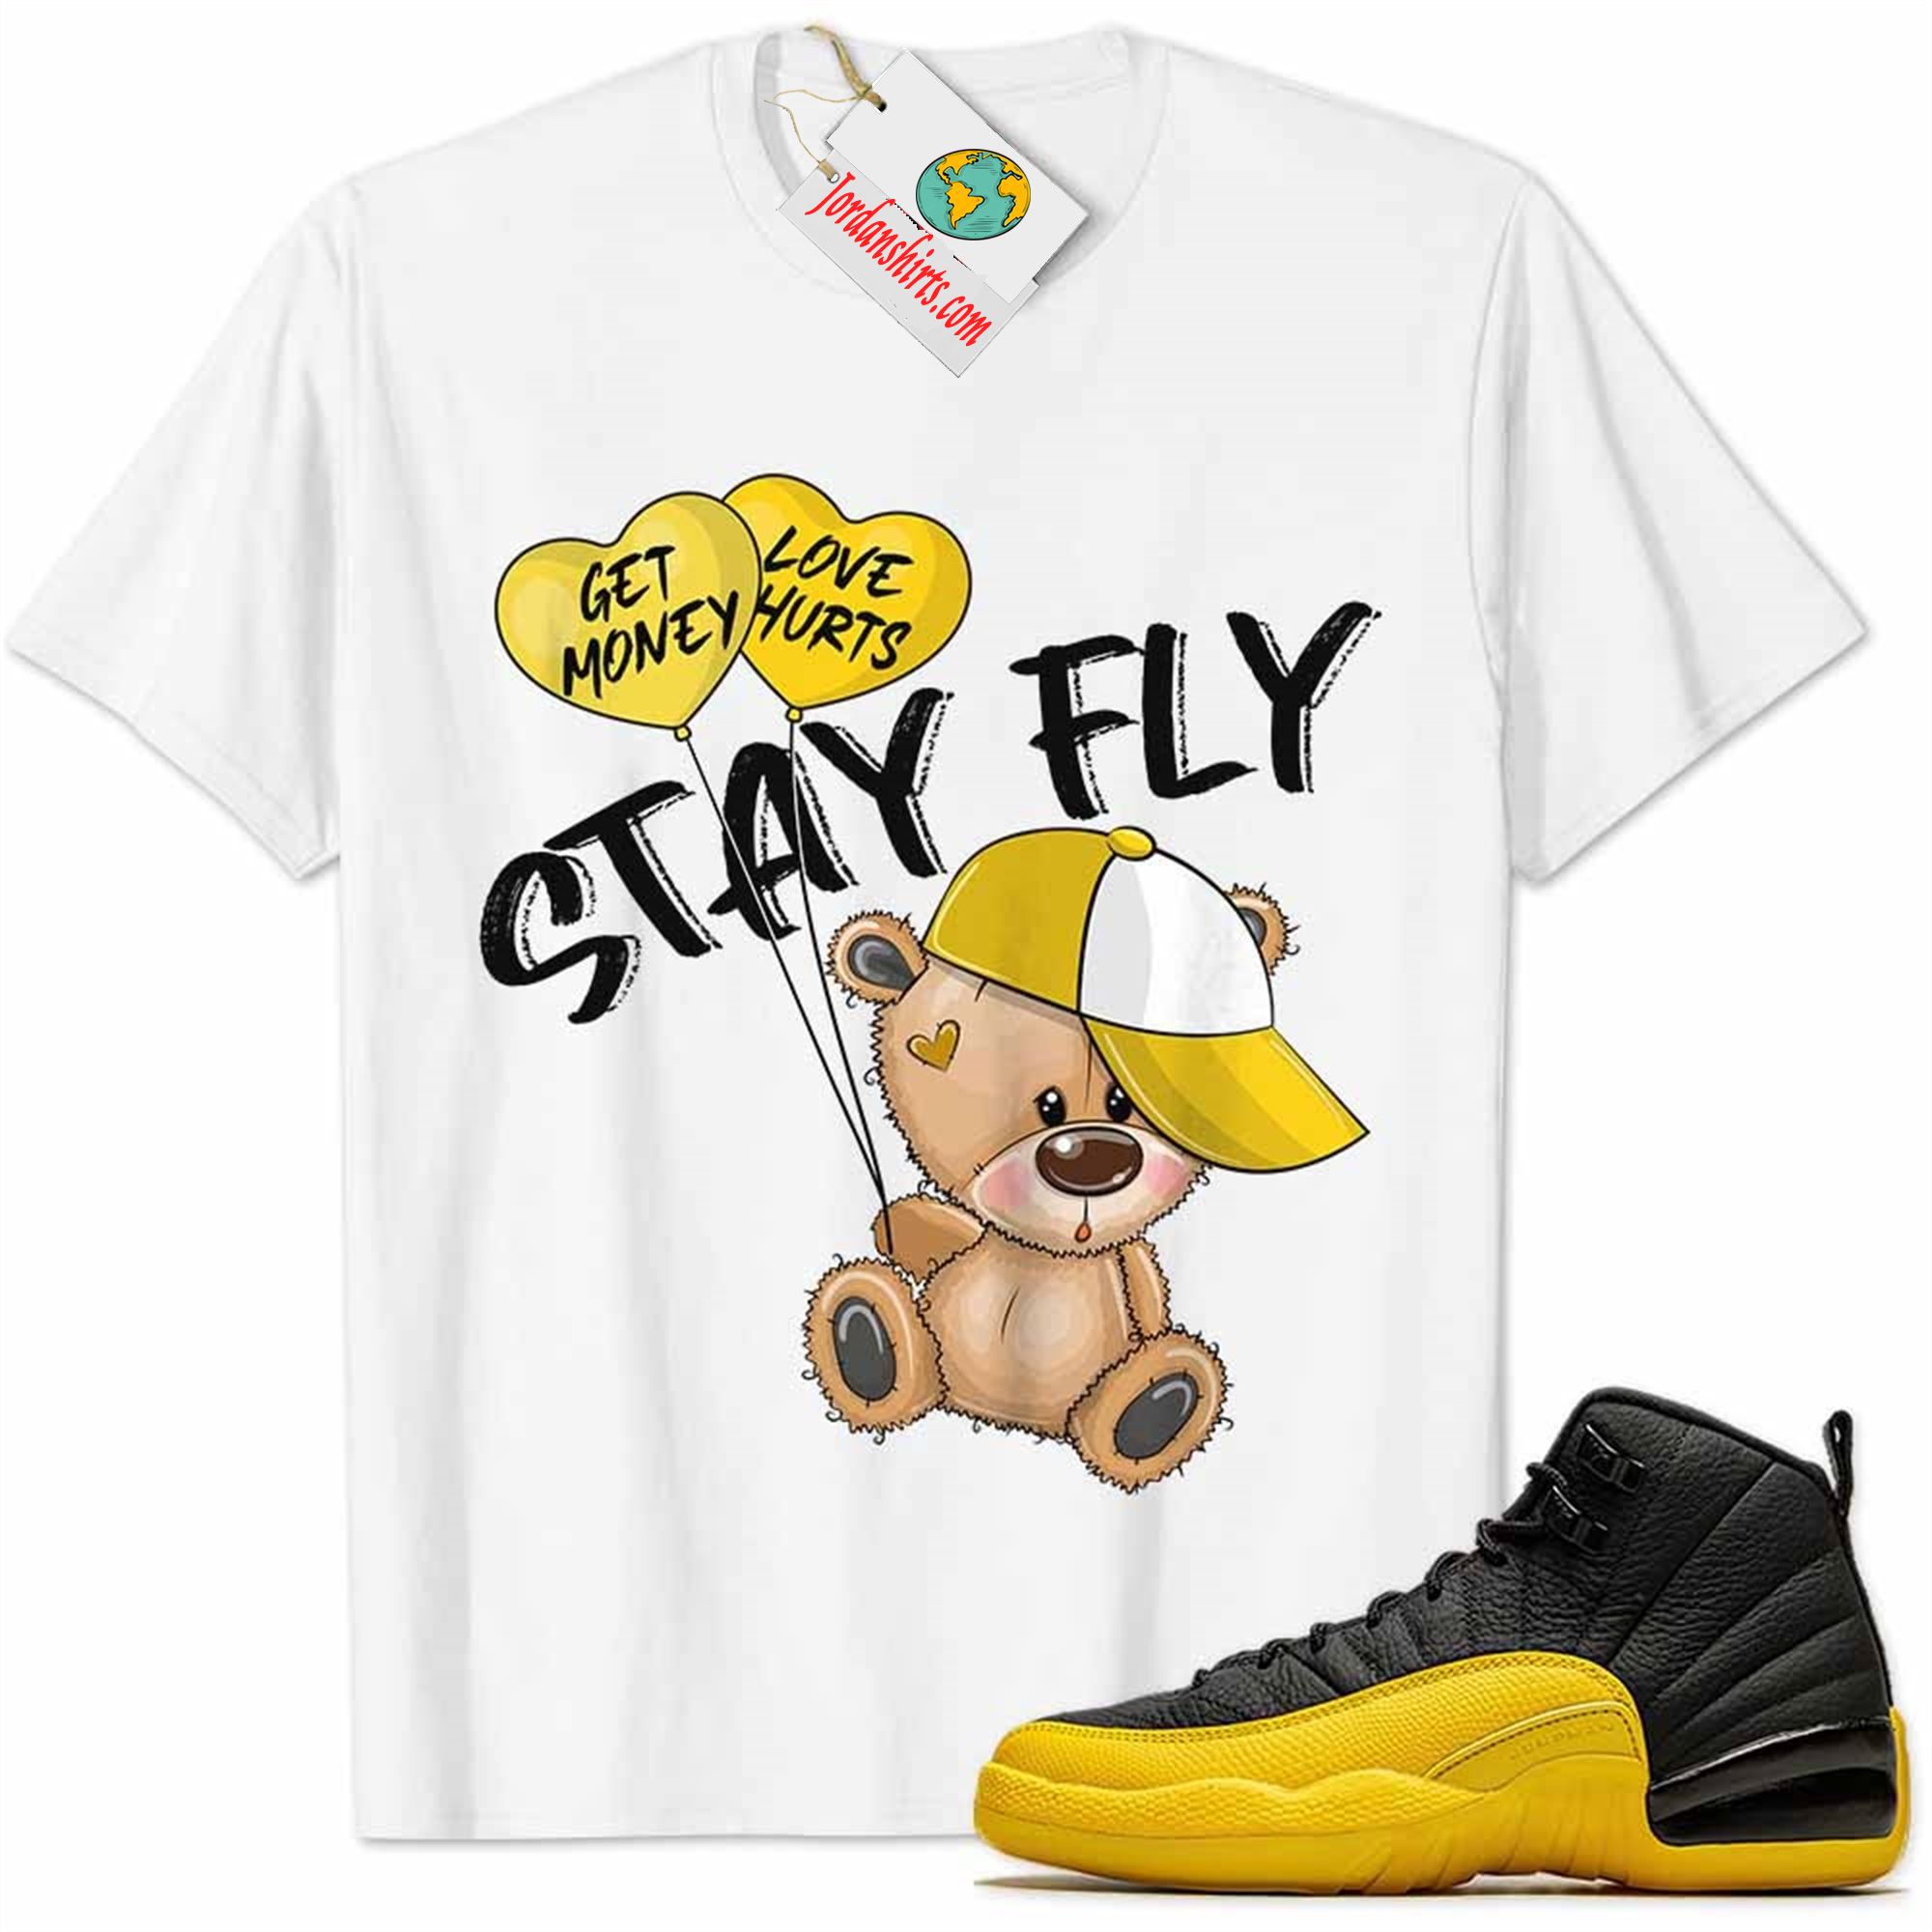 Jordan 12 Shirt, University Gold 12s Shirt Cute Teddy Bear Stay Fly Get Money White Plus Size Up To 5xl